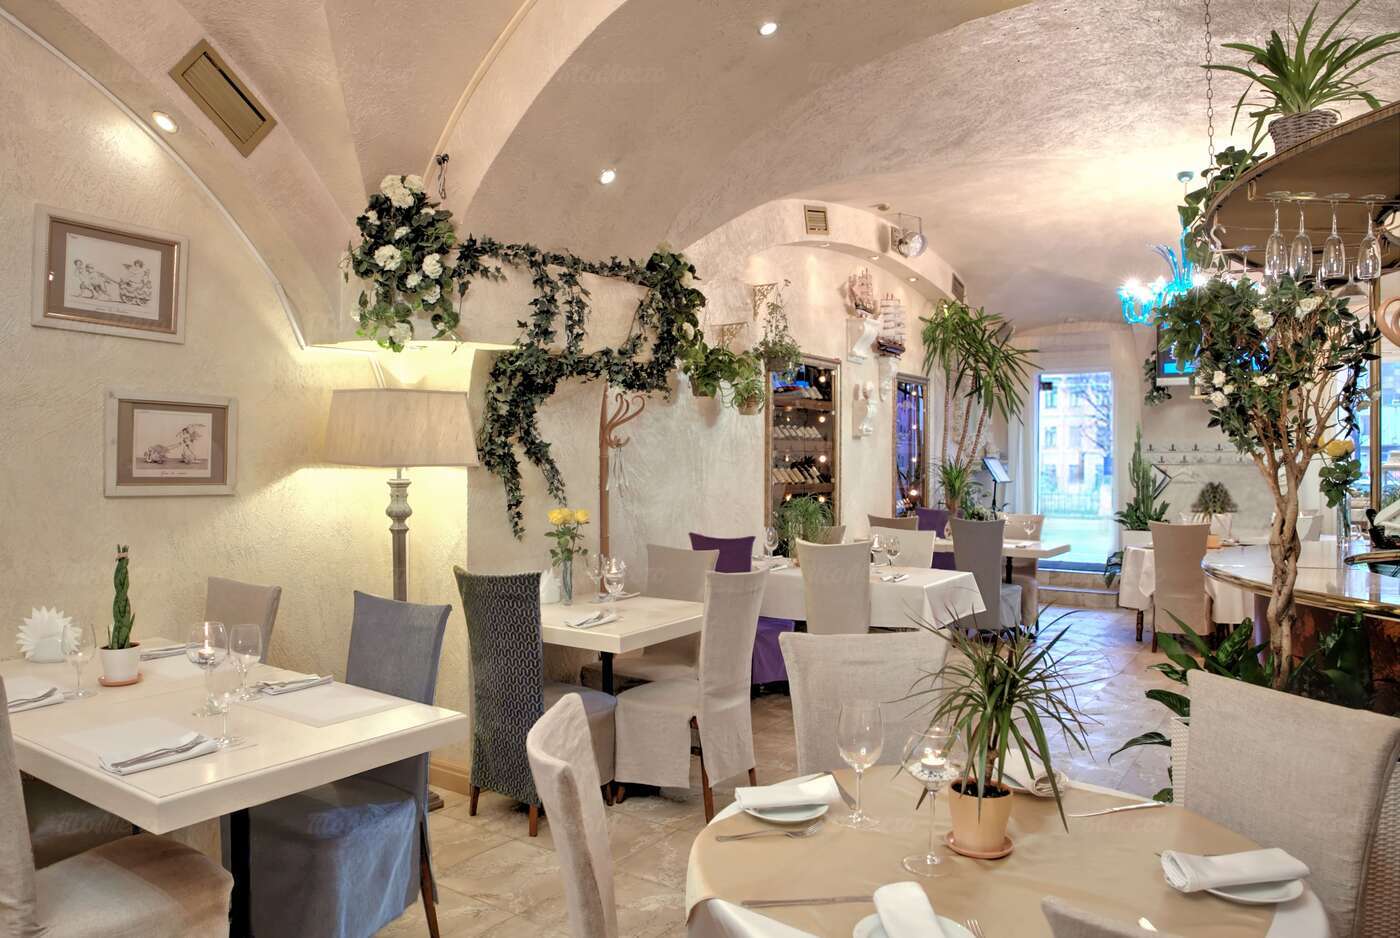 Ресторан Палермо (Palermo) на набережной реки Фонтанки